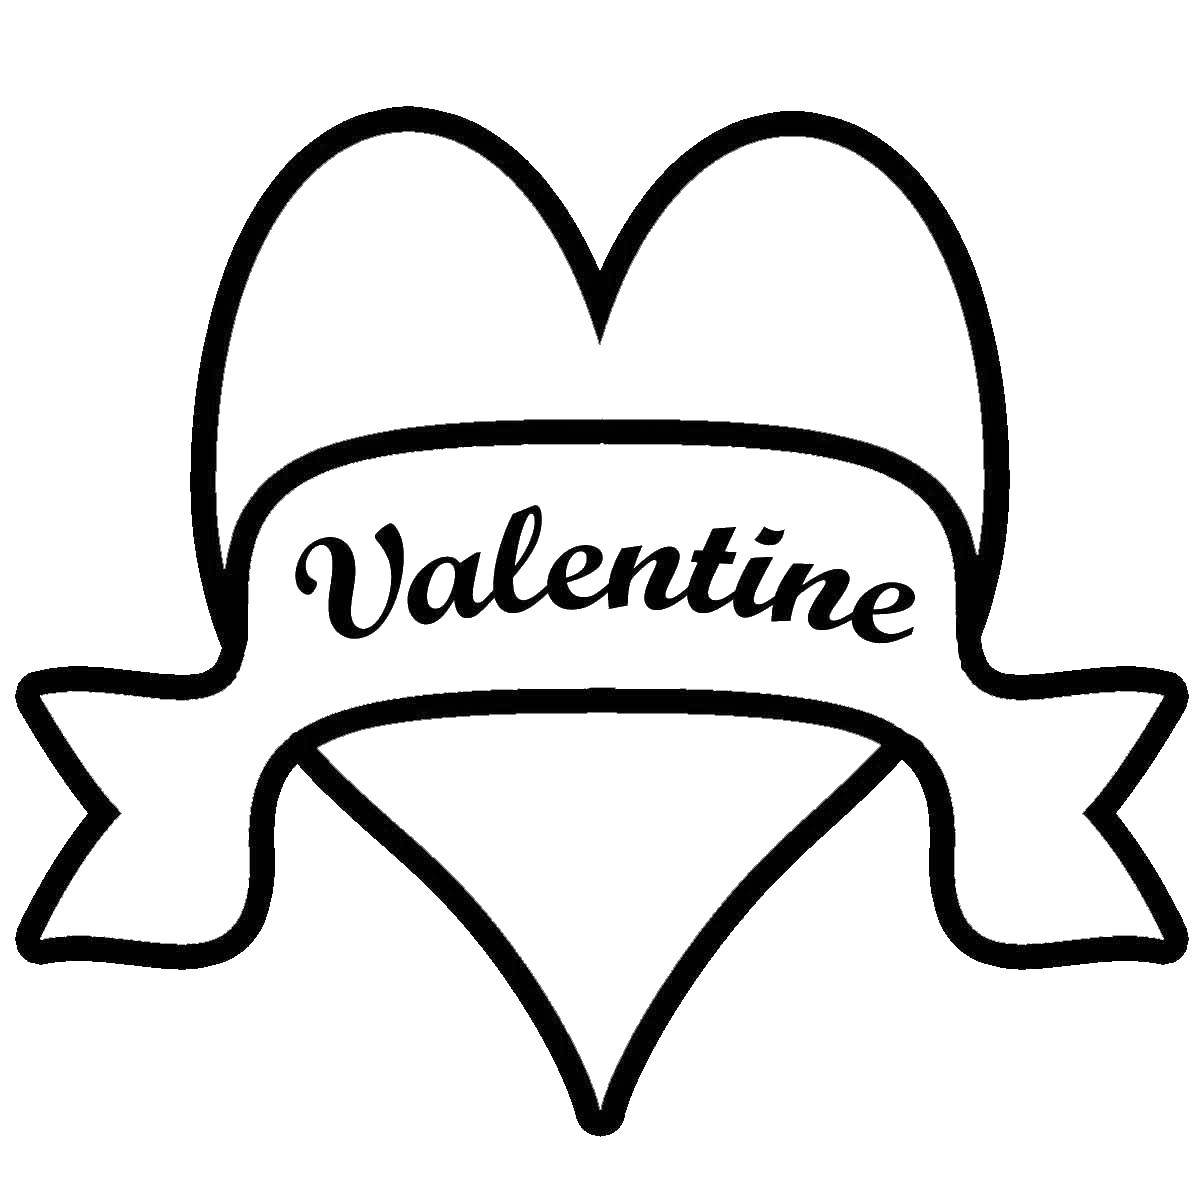 Coloring День святого валентина. Category праздник. Tags:  праздник, день Святого Валентина, любовь, сердце.